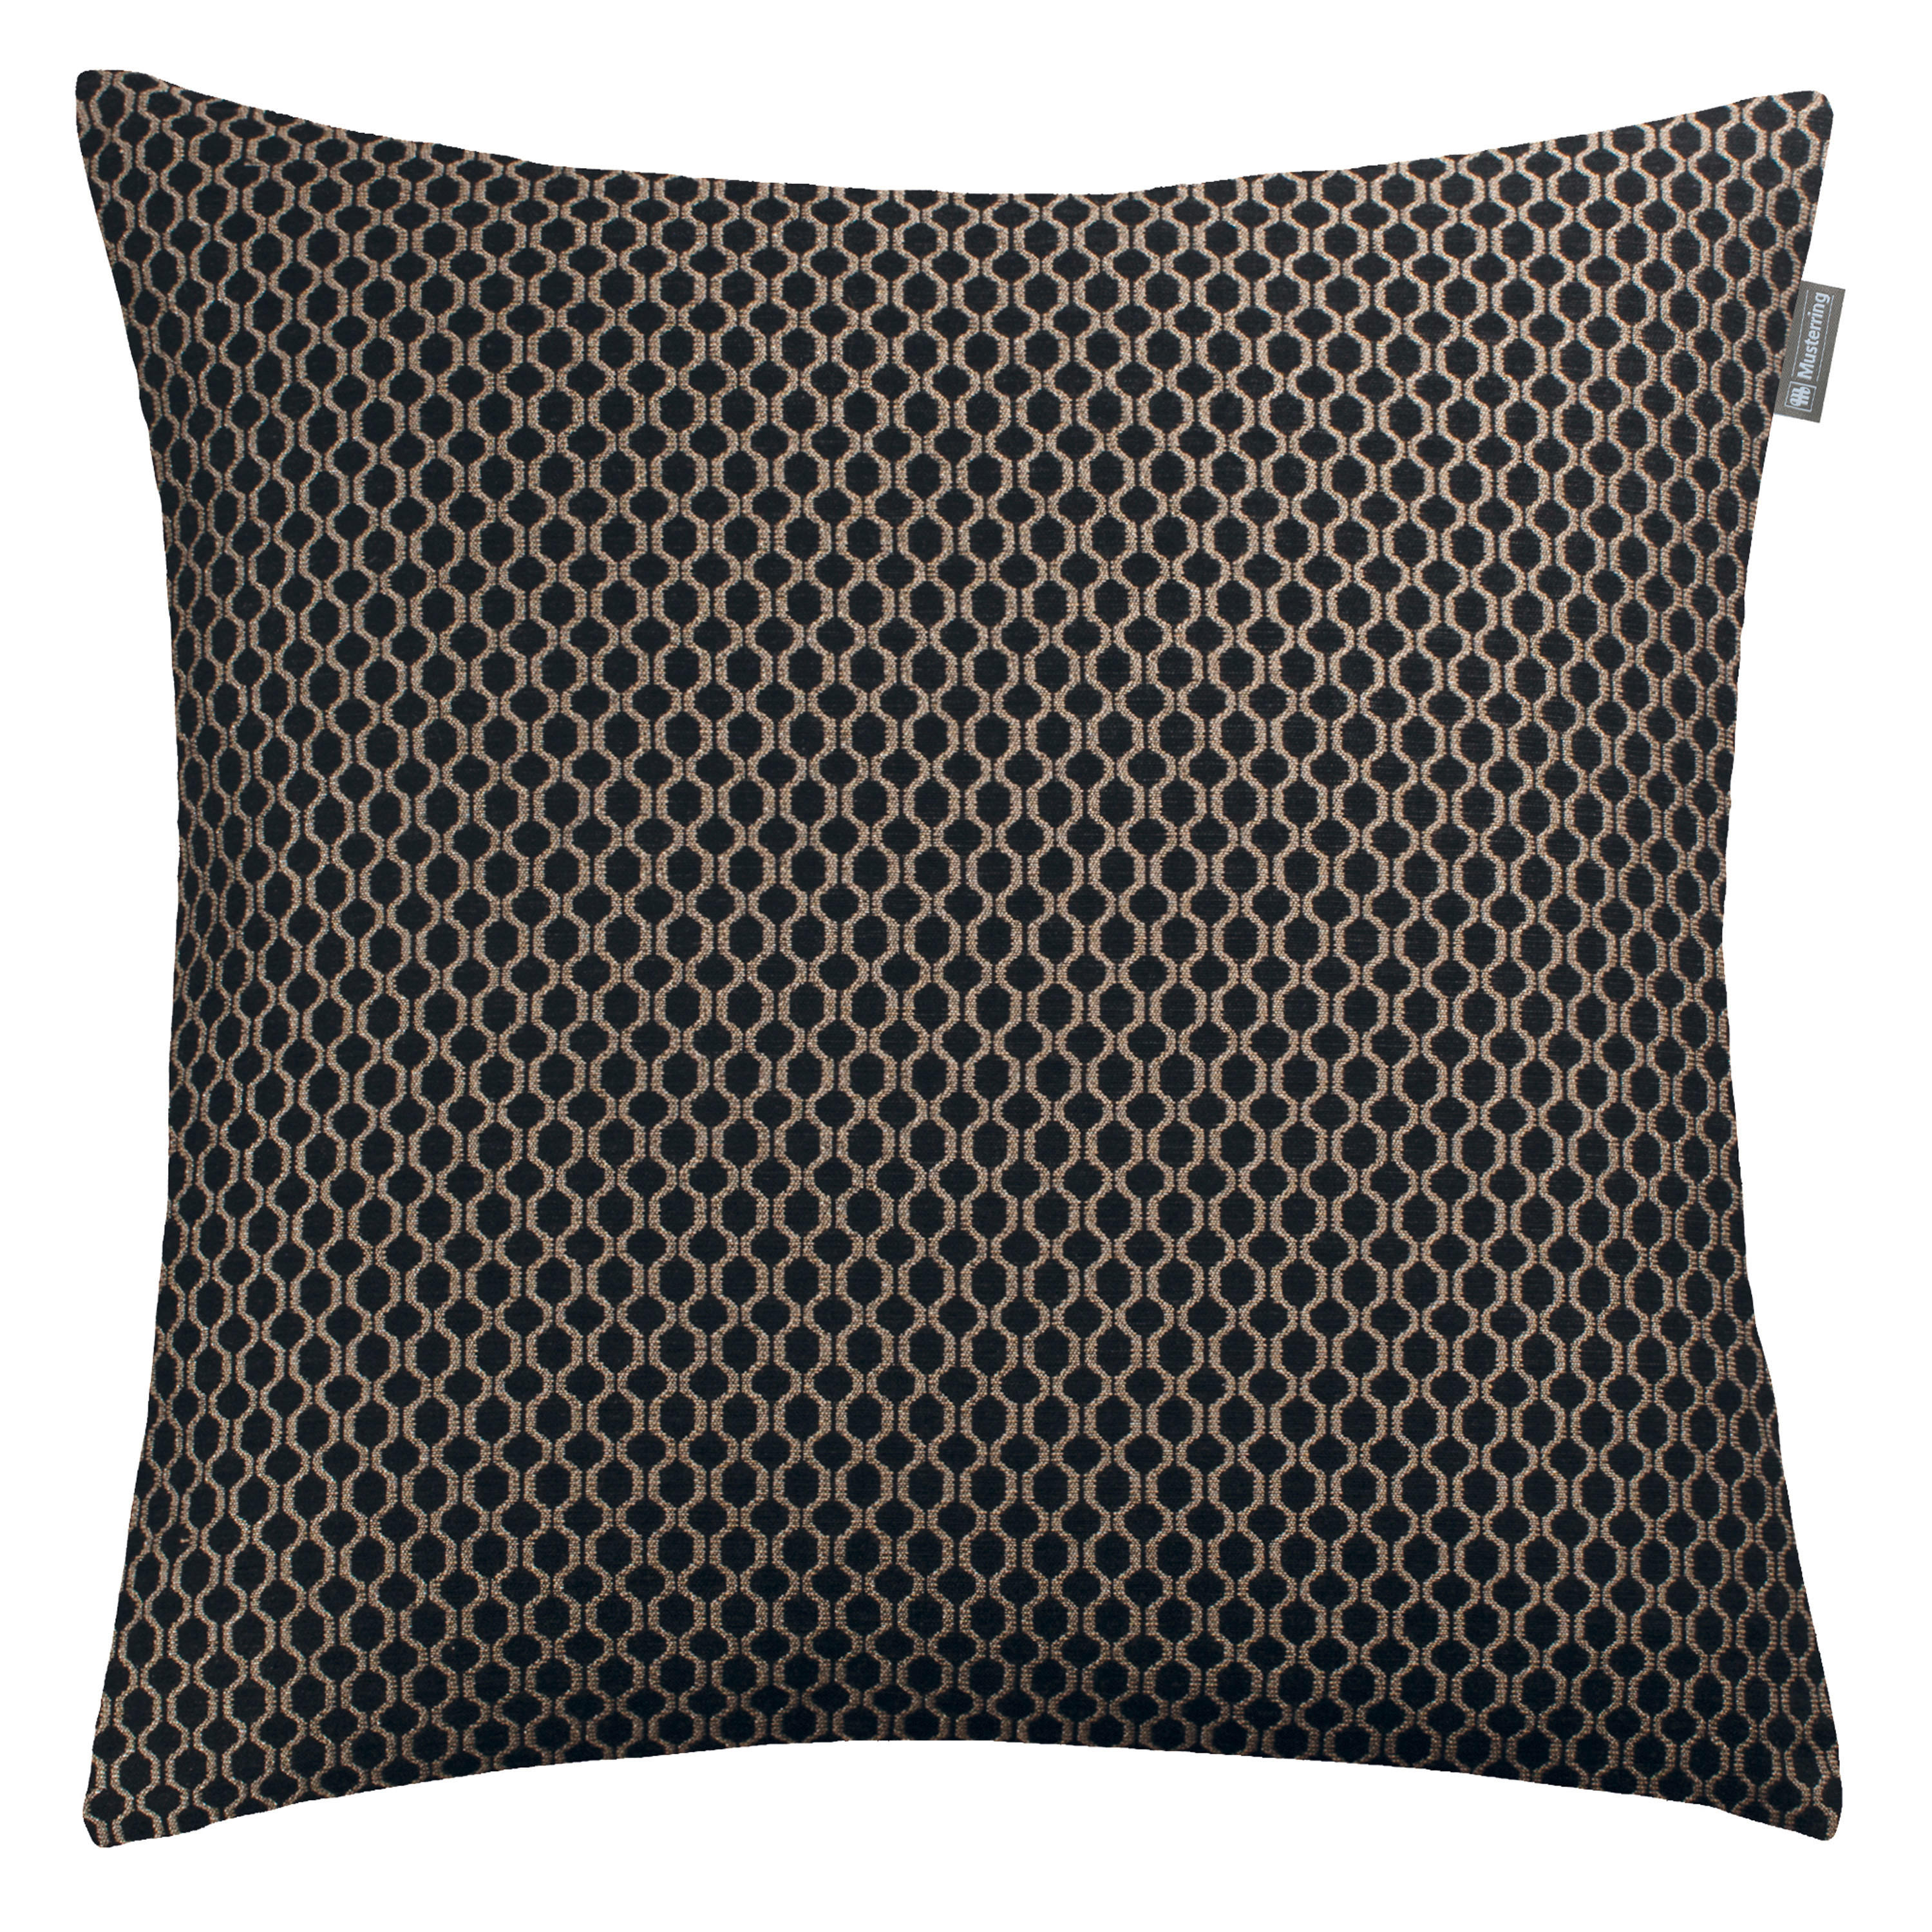 KISSENHÜLLE MR-HONEYCOMB 45/45 cm  - Beige/Schwarz, Basics, Textil (45/45cm) - Musterring